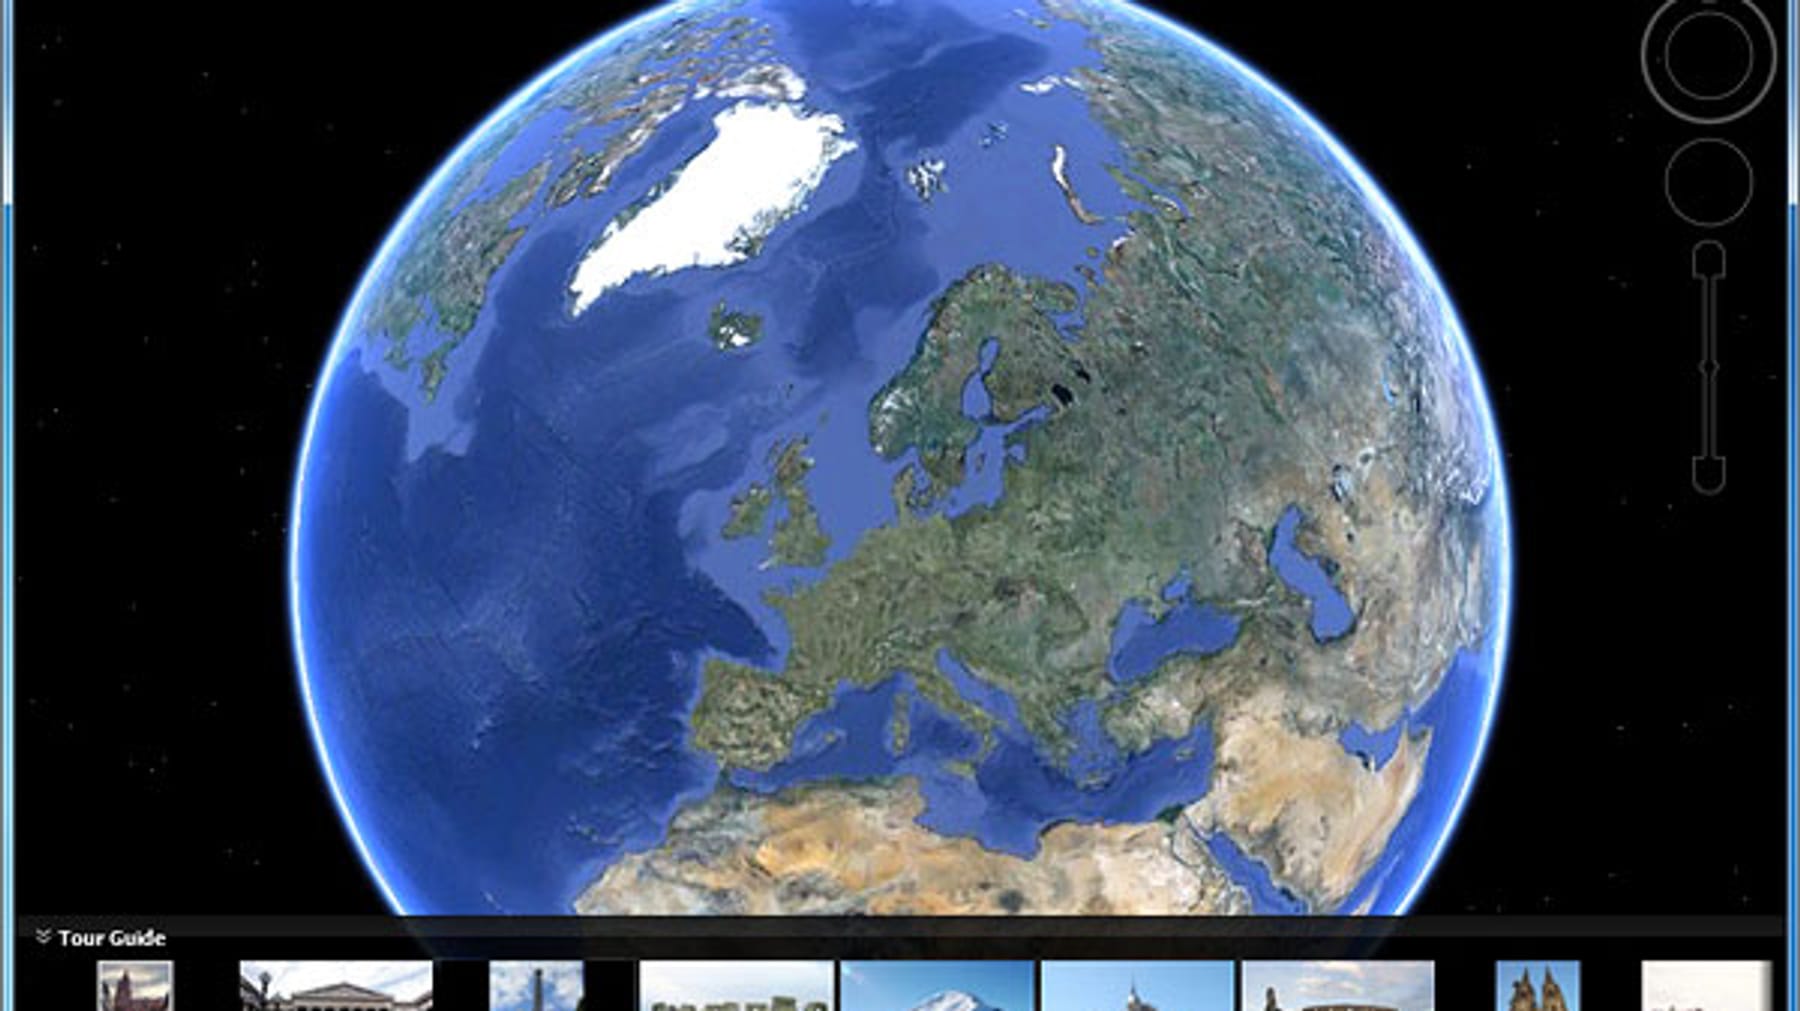 google earth imaging